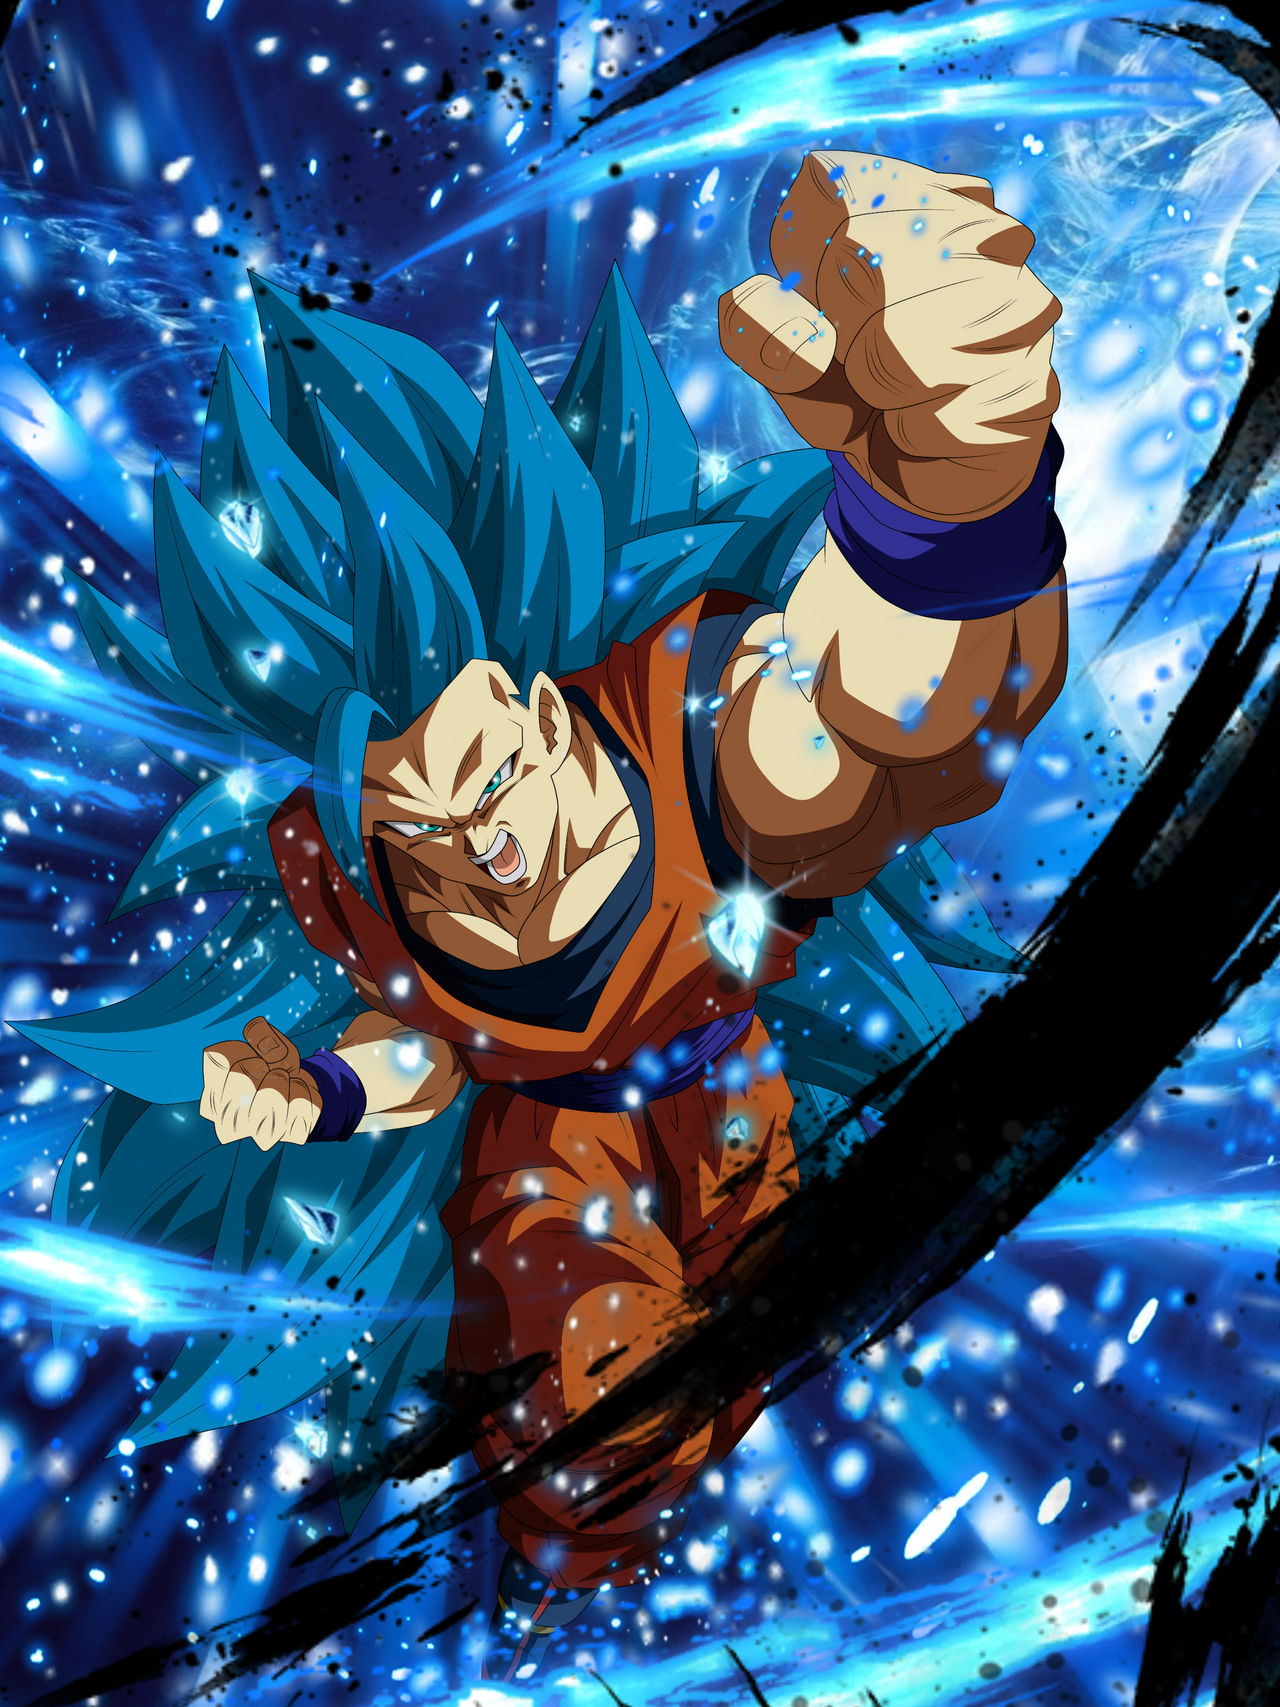 Goku Ssj Lendario Blue by MKLEONHART on DeviantArt